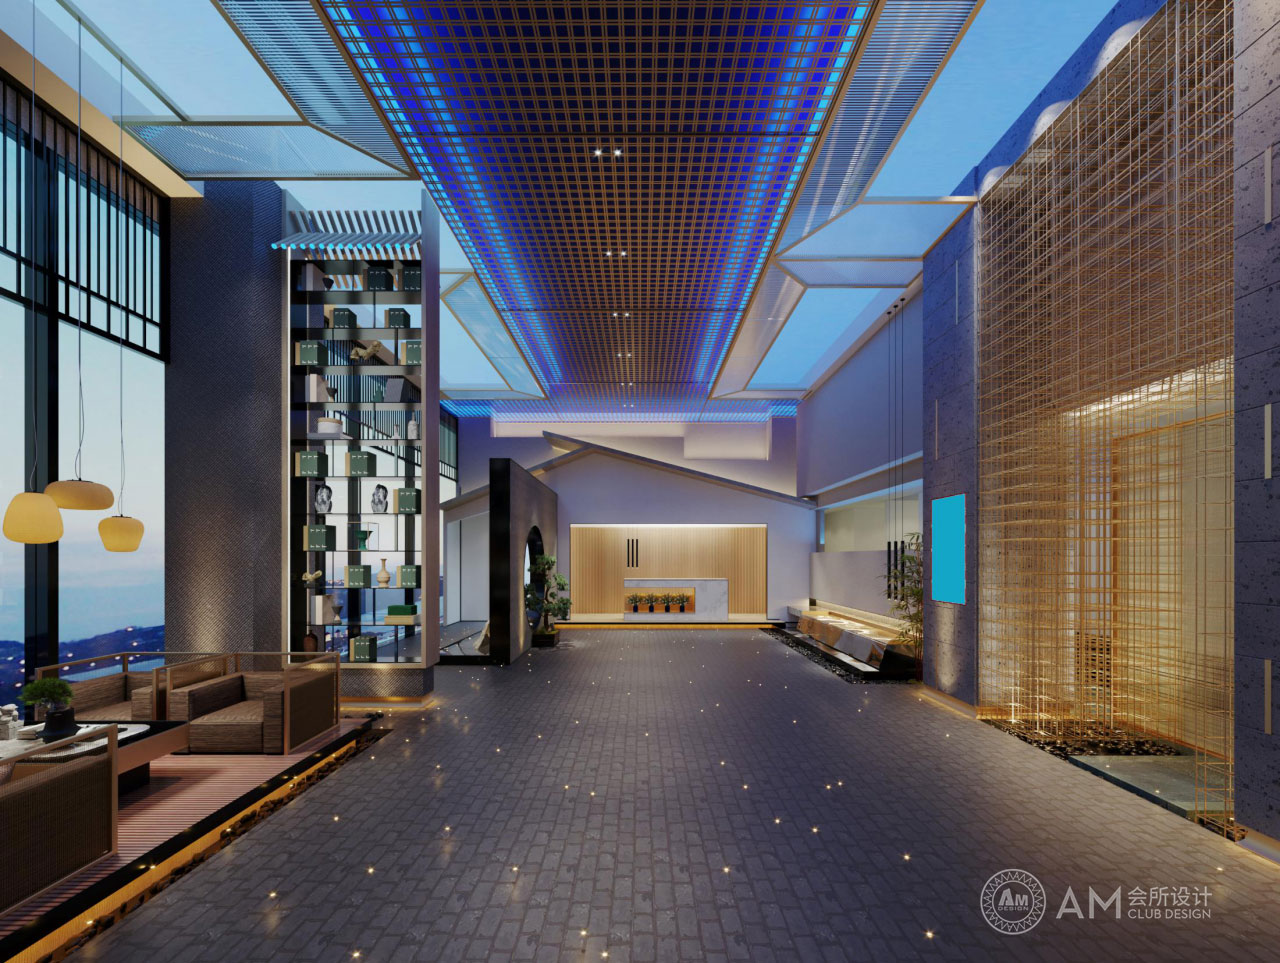 AM DESIGN | Four Seasons Flower City SPA Club Lobby Design